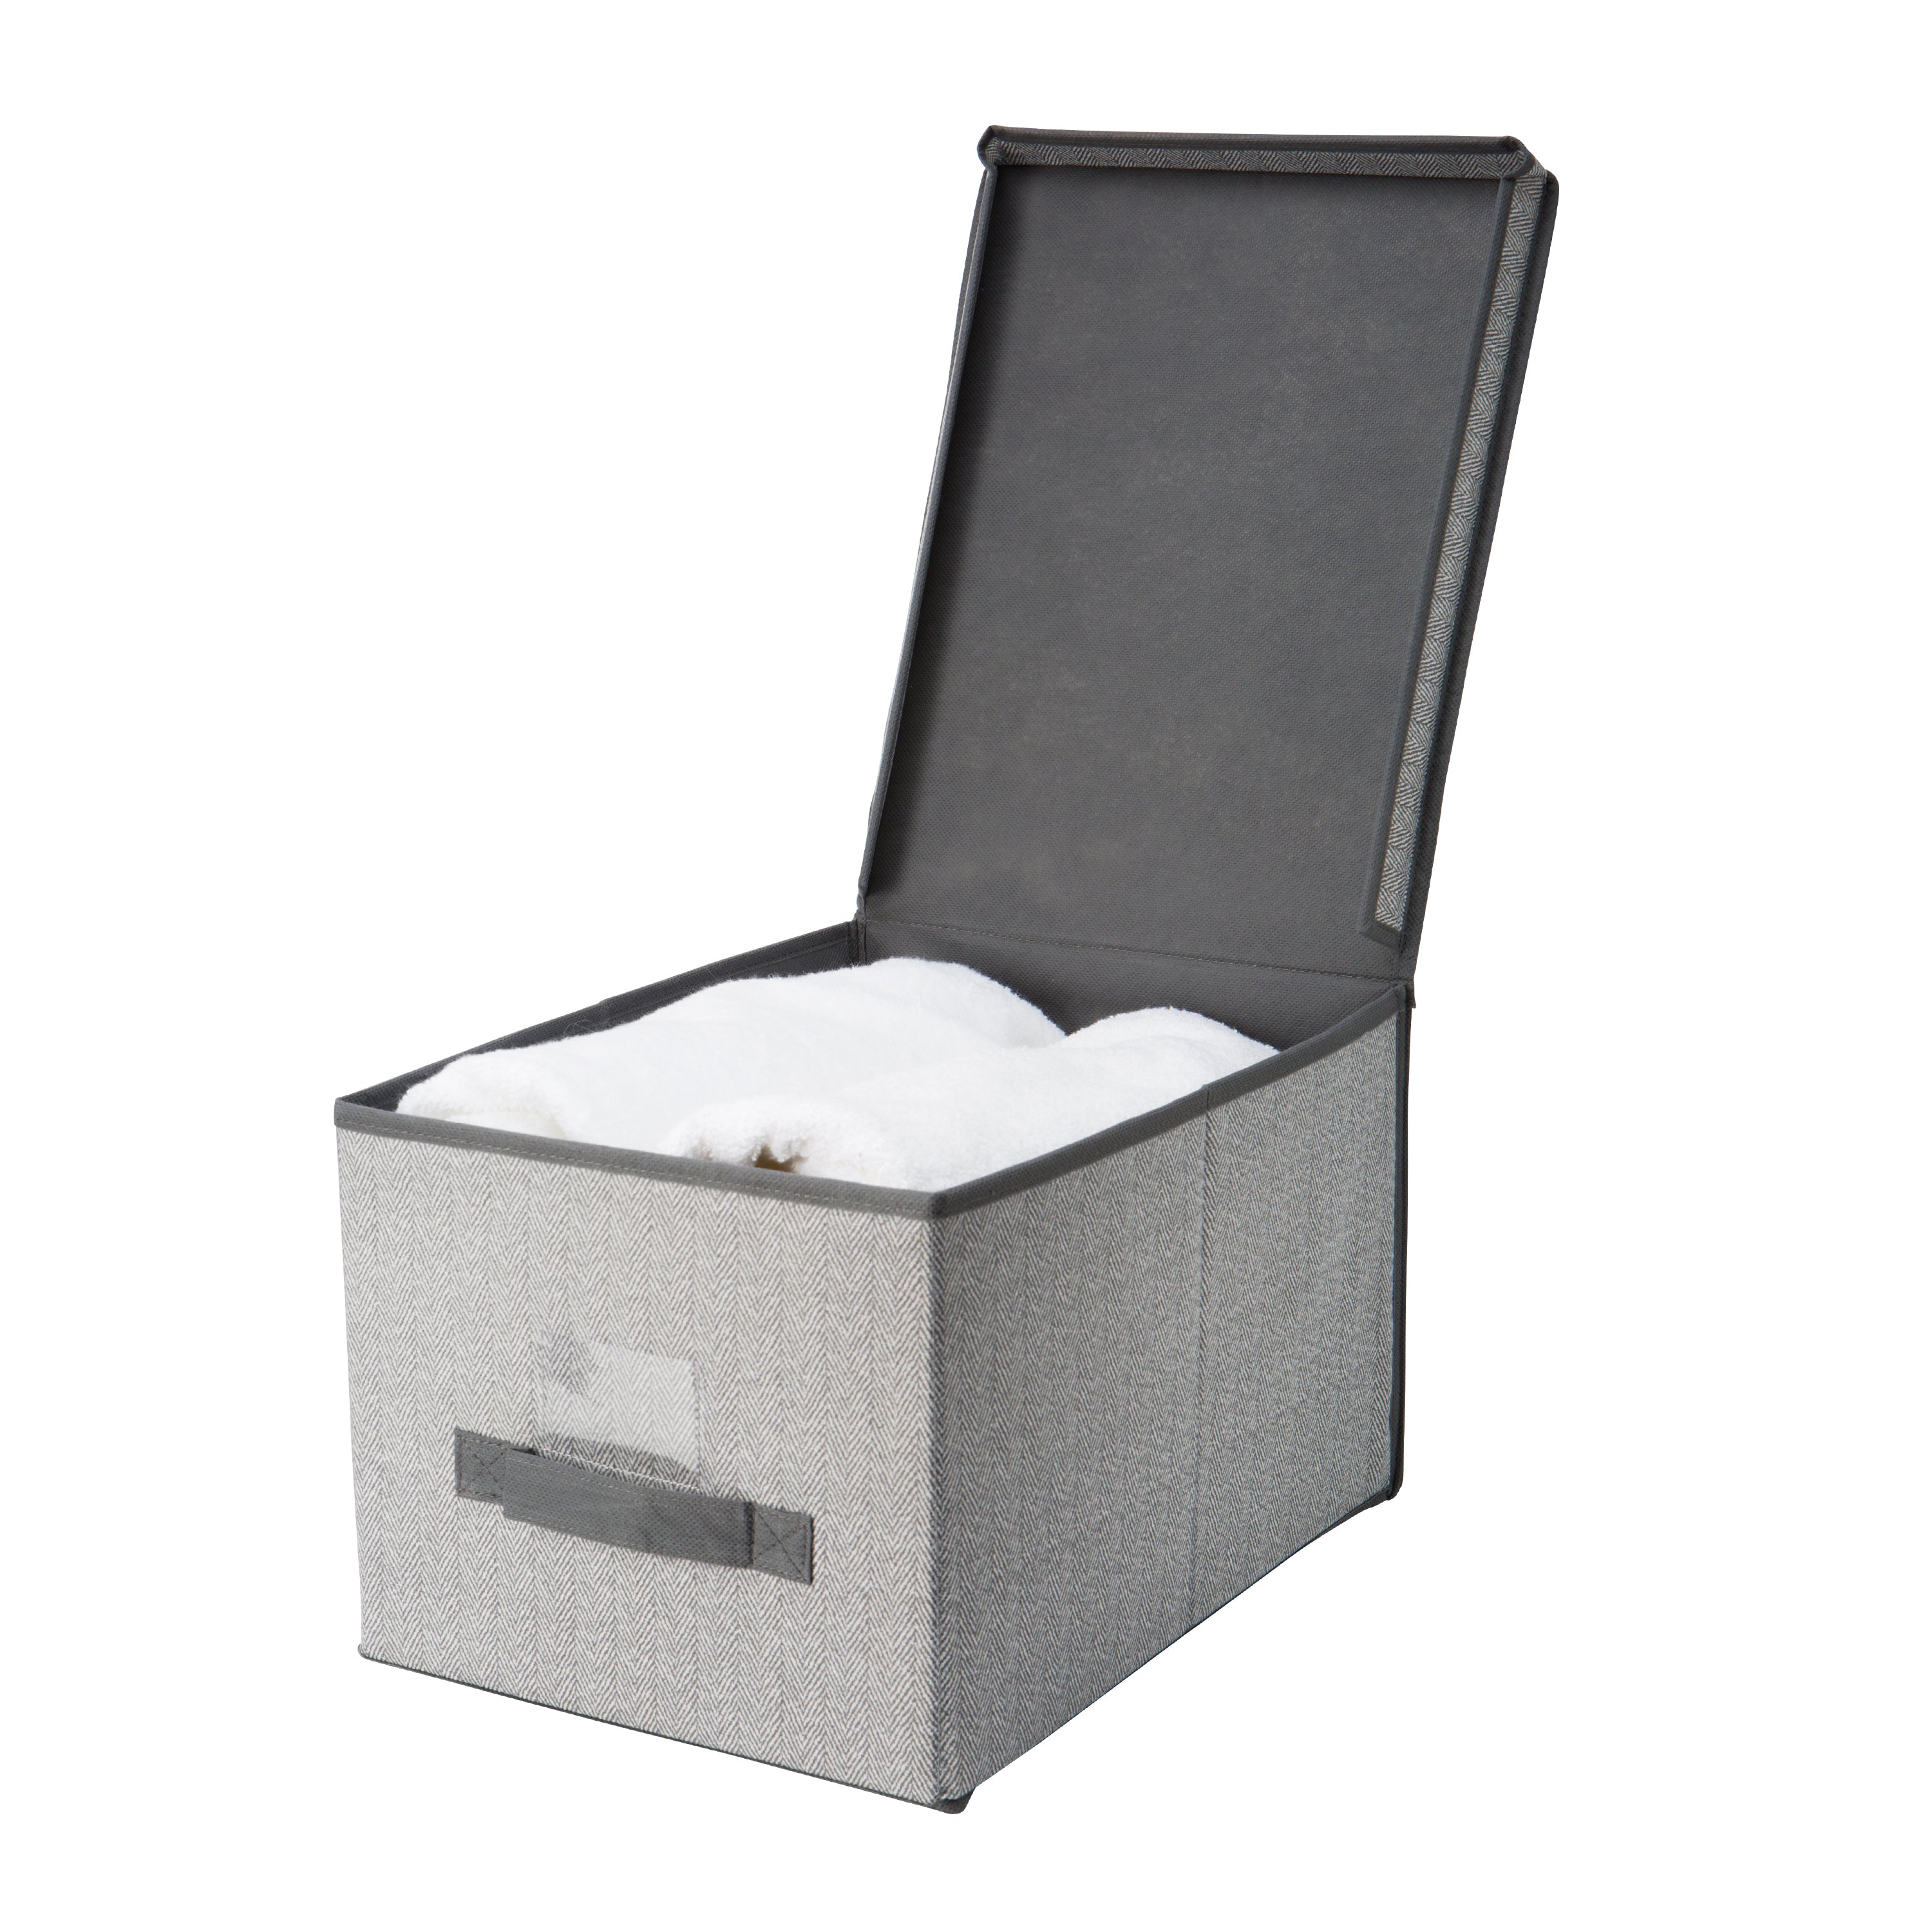 Simplify Large Storage Box in Grey